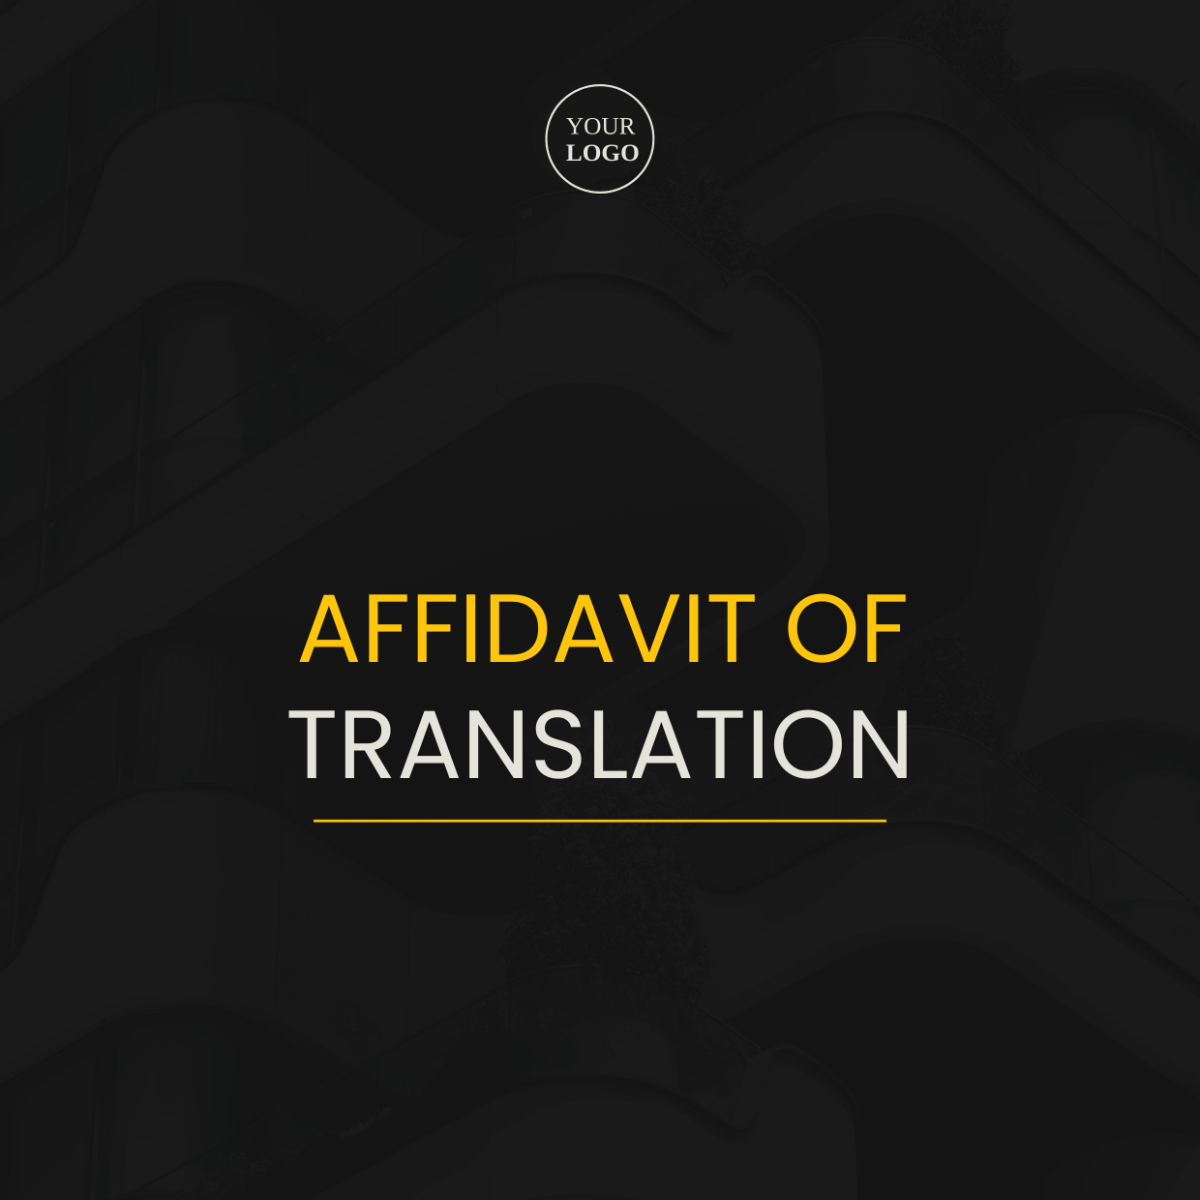 Affidavit of Translation Template